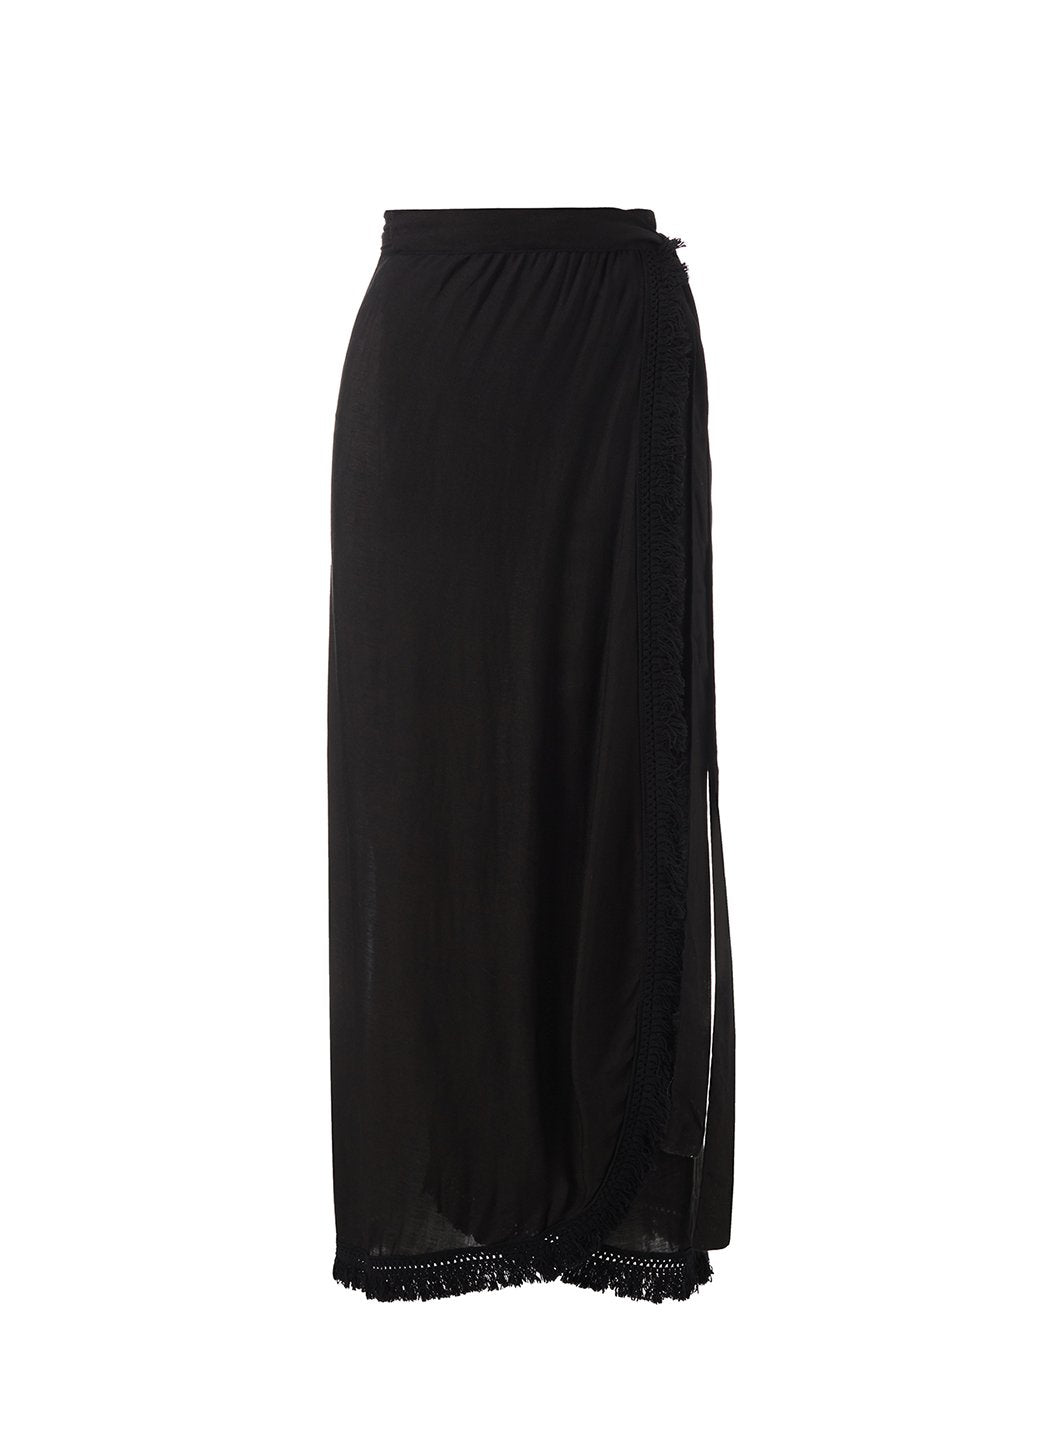 lily black tassel wrap skirt Cutout